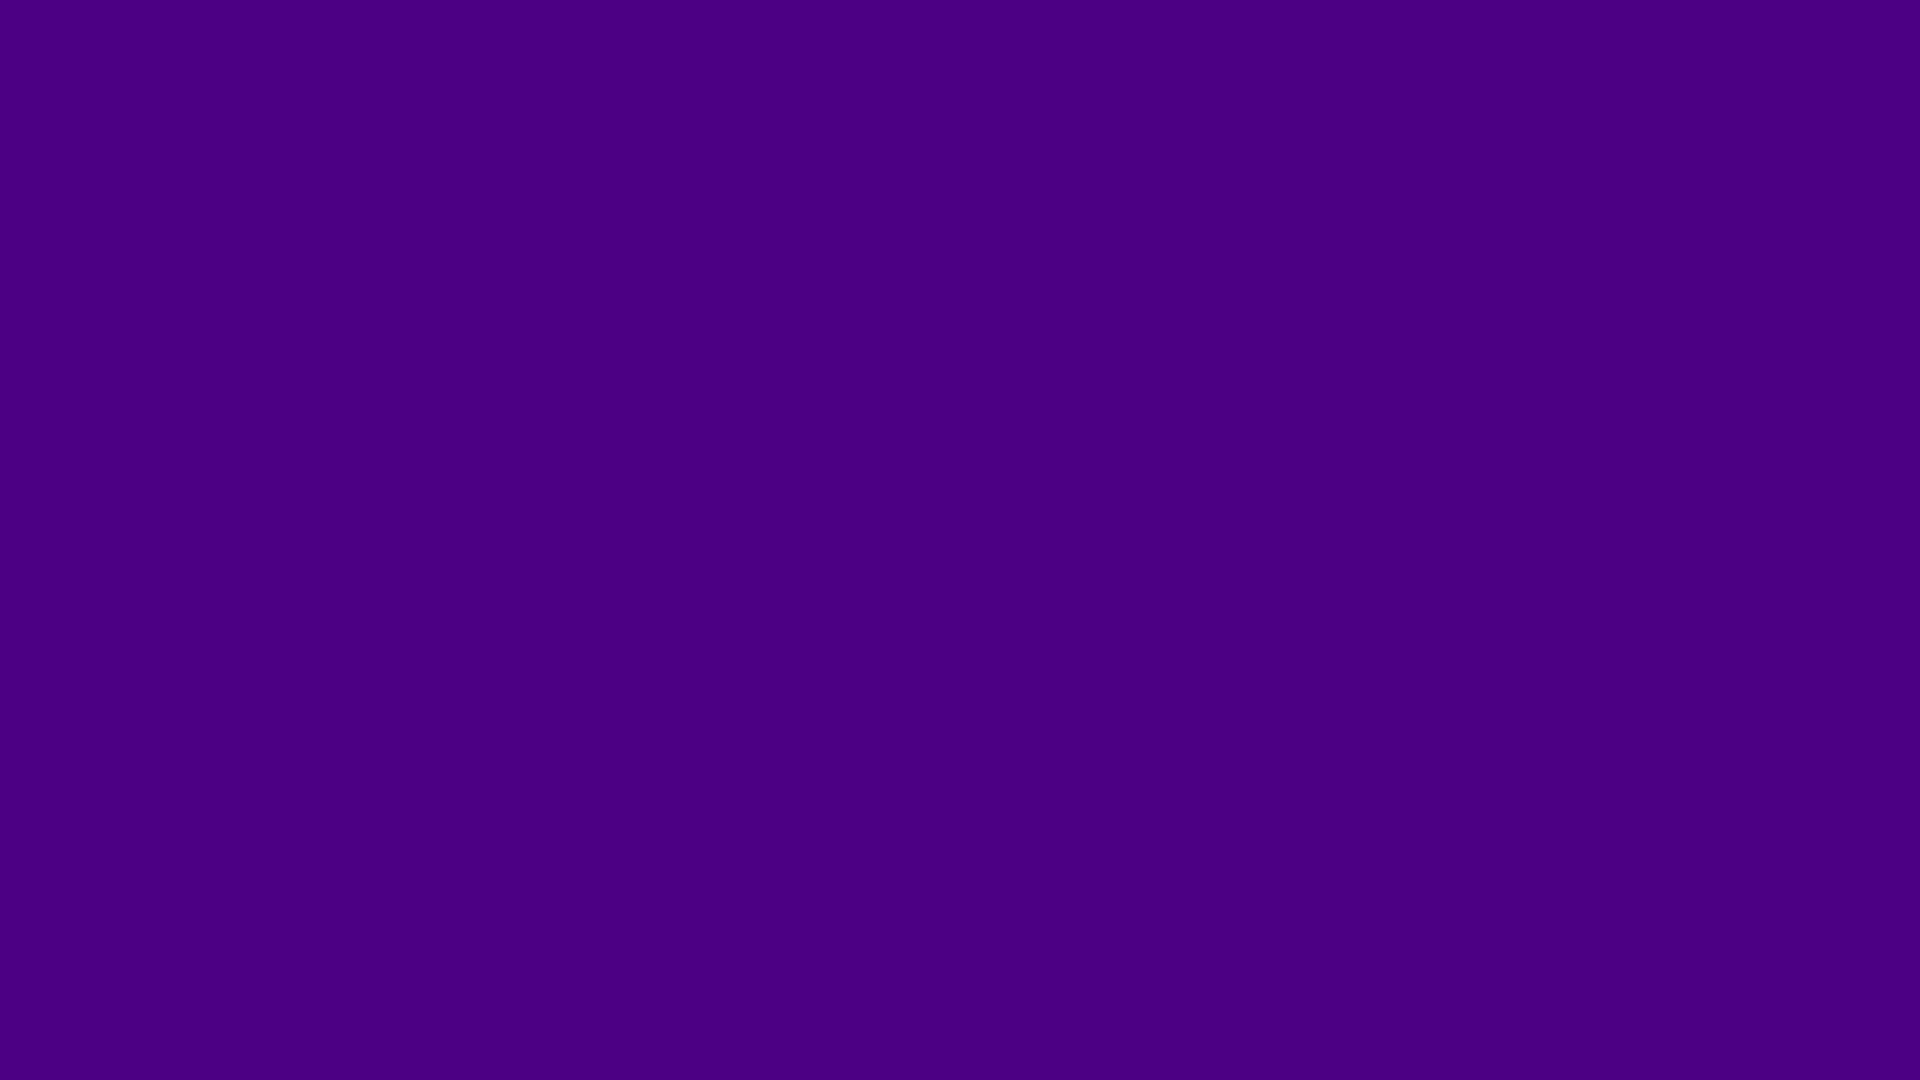 A purple background with white text - Indigo